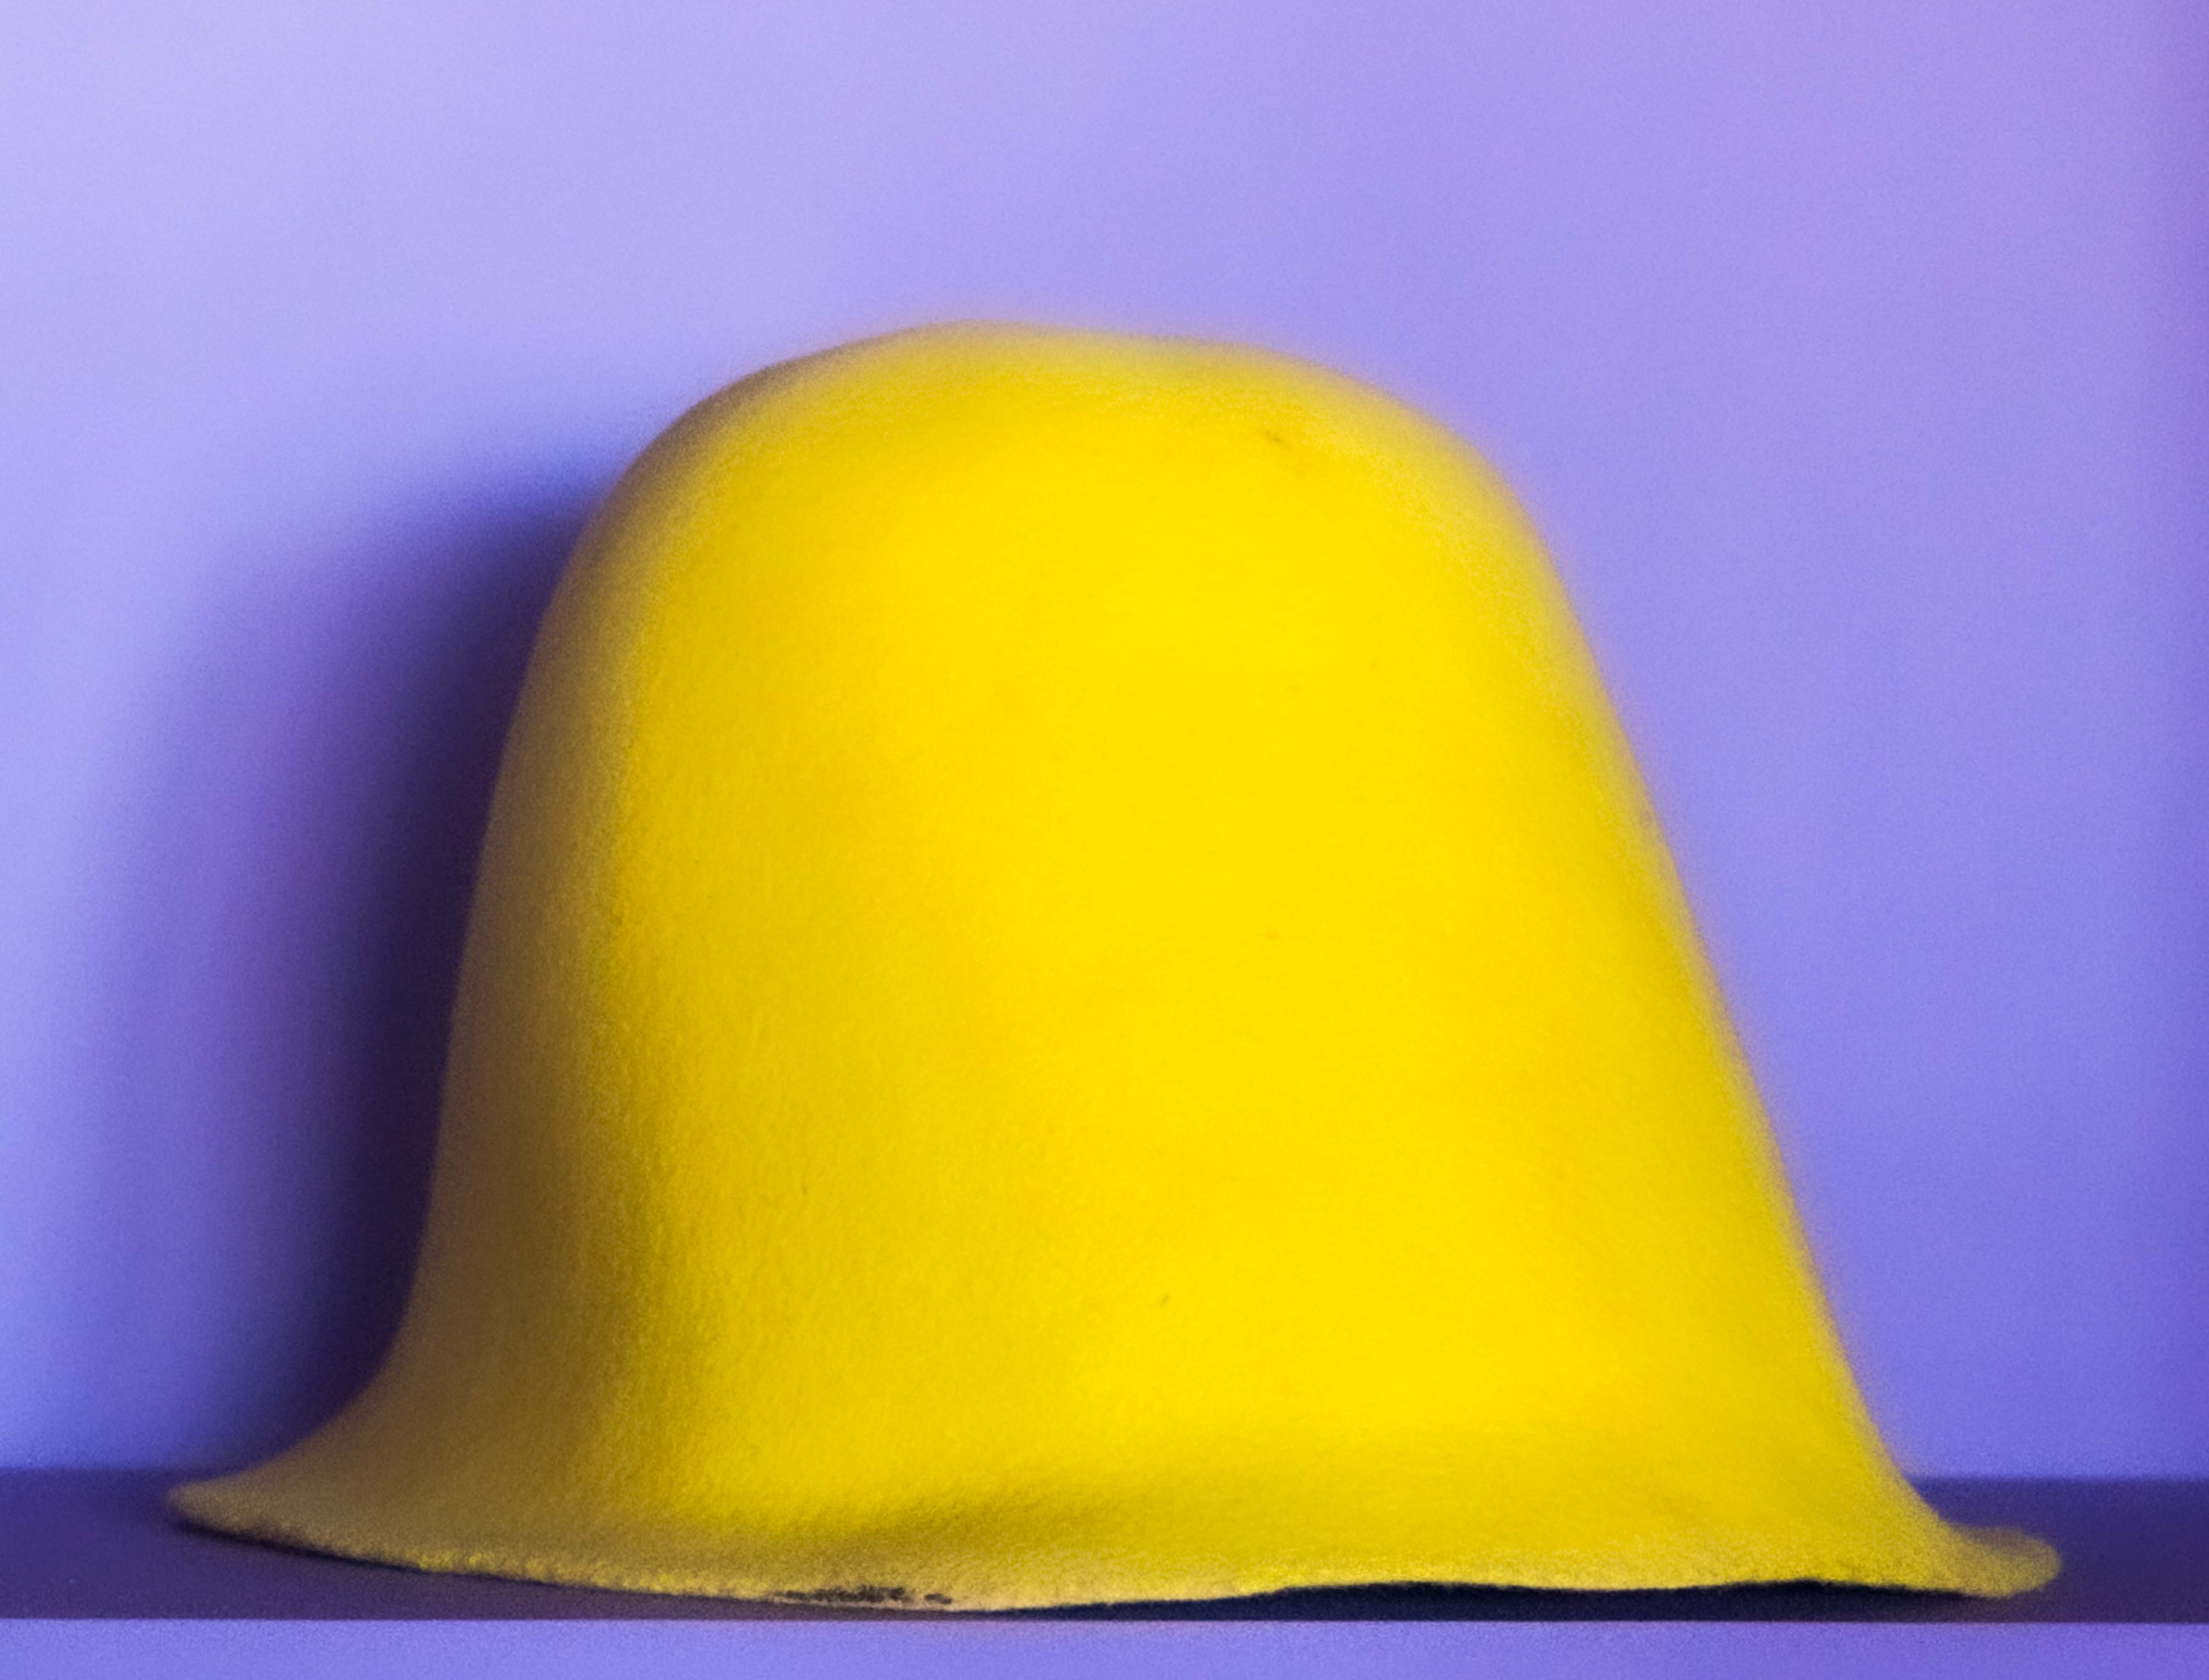 Argentina, Jujuy Prov, Yellow Hat, 2010, IMG 7900 CU2